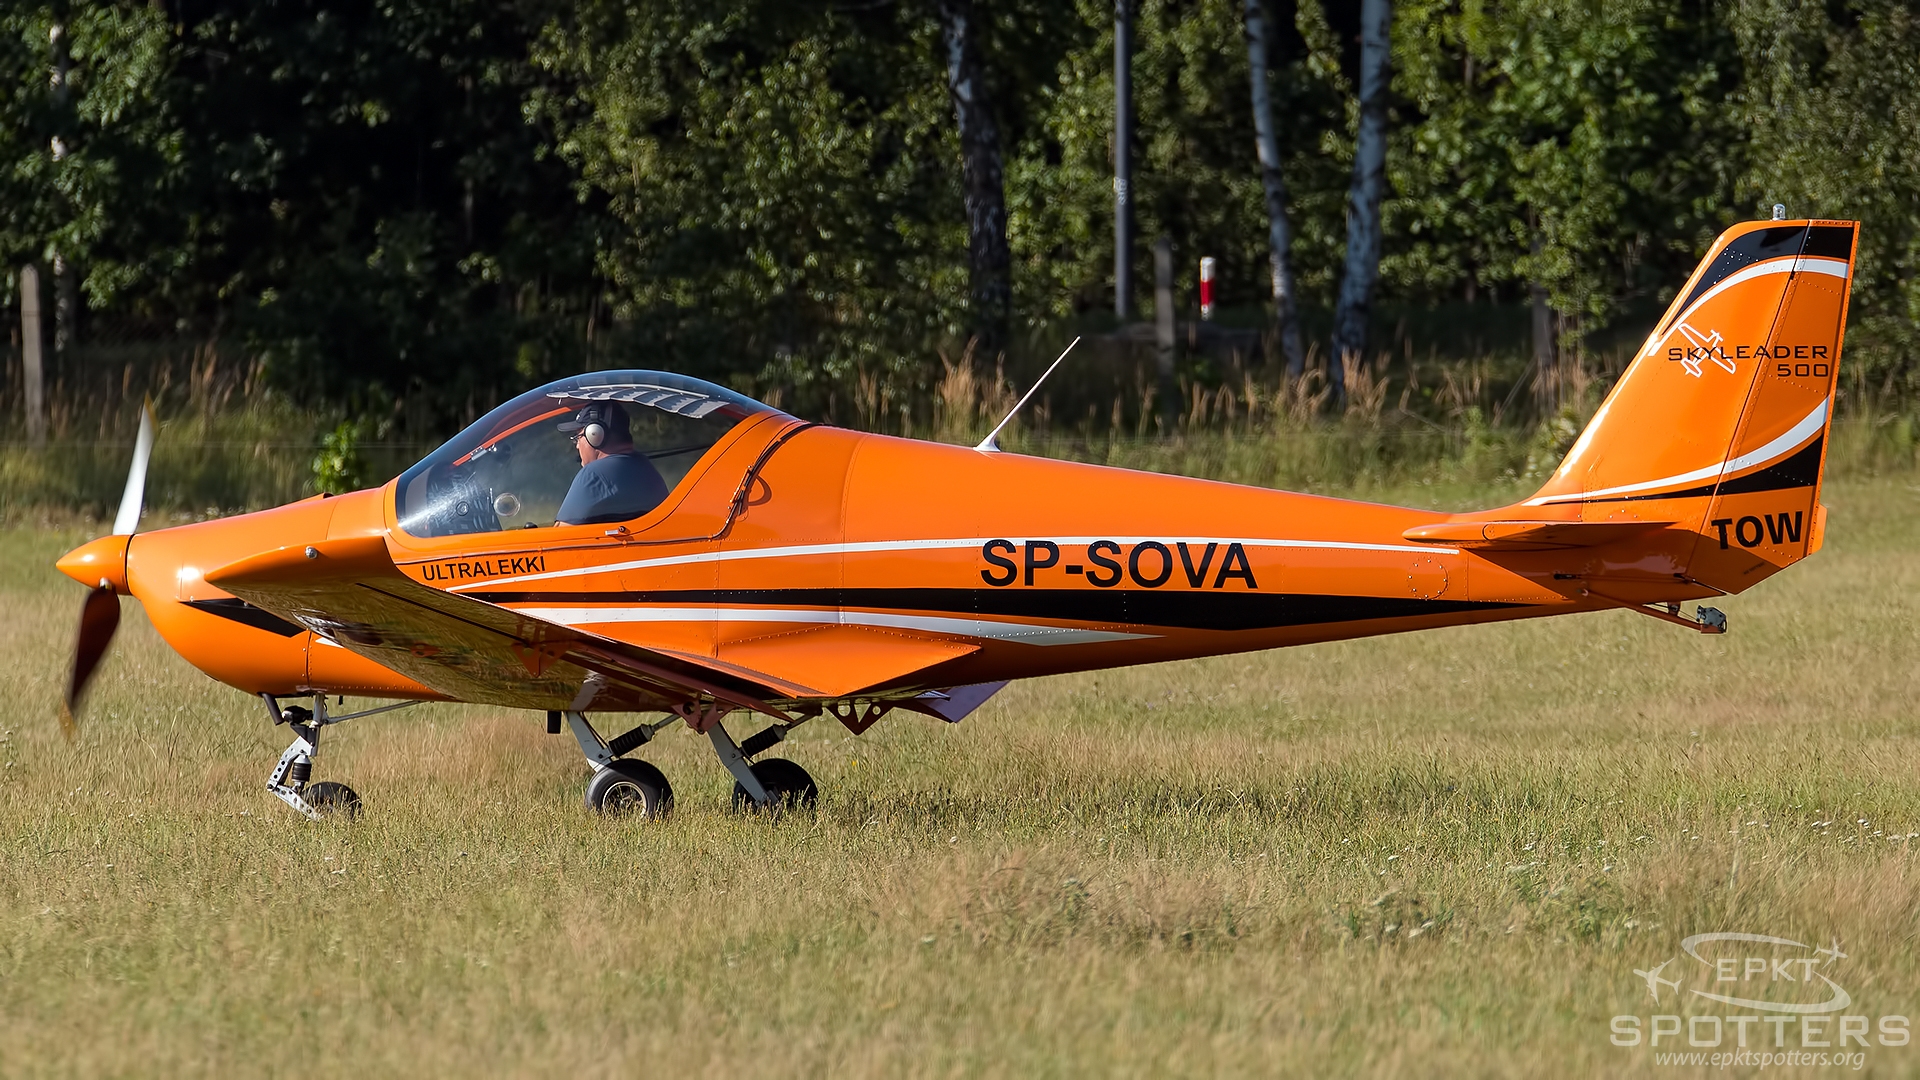 SP-SOVA - Skyleader 500  (Private) / Gotartowice - Rybnik - Rybnik Poland [EPRG/]